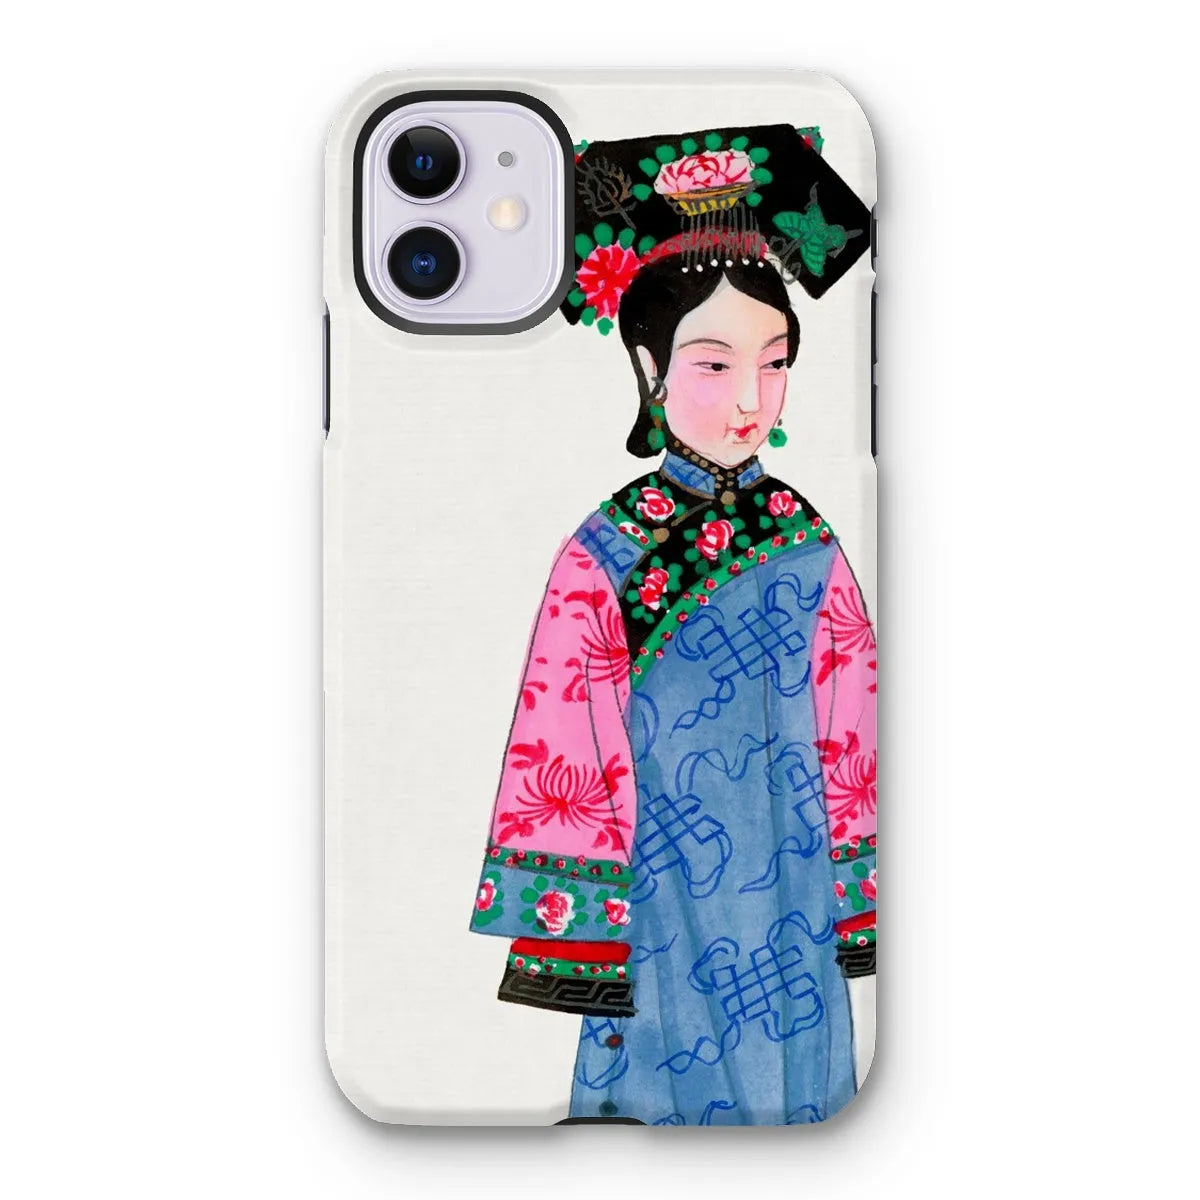 Noblewoman Too - Manchu Aesthetic Art Phone Case - Iphone 11 / Matte - Mobile Phone Cases - Aesthetic Art